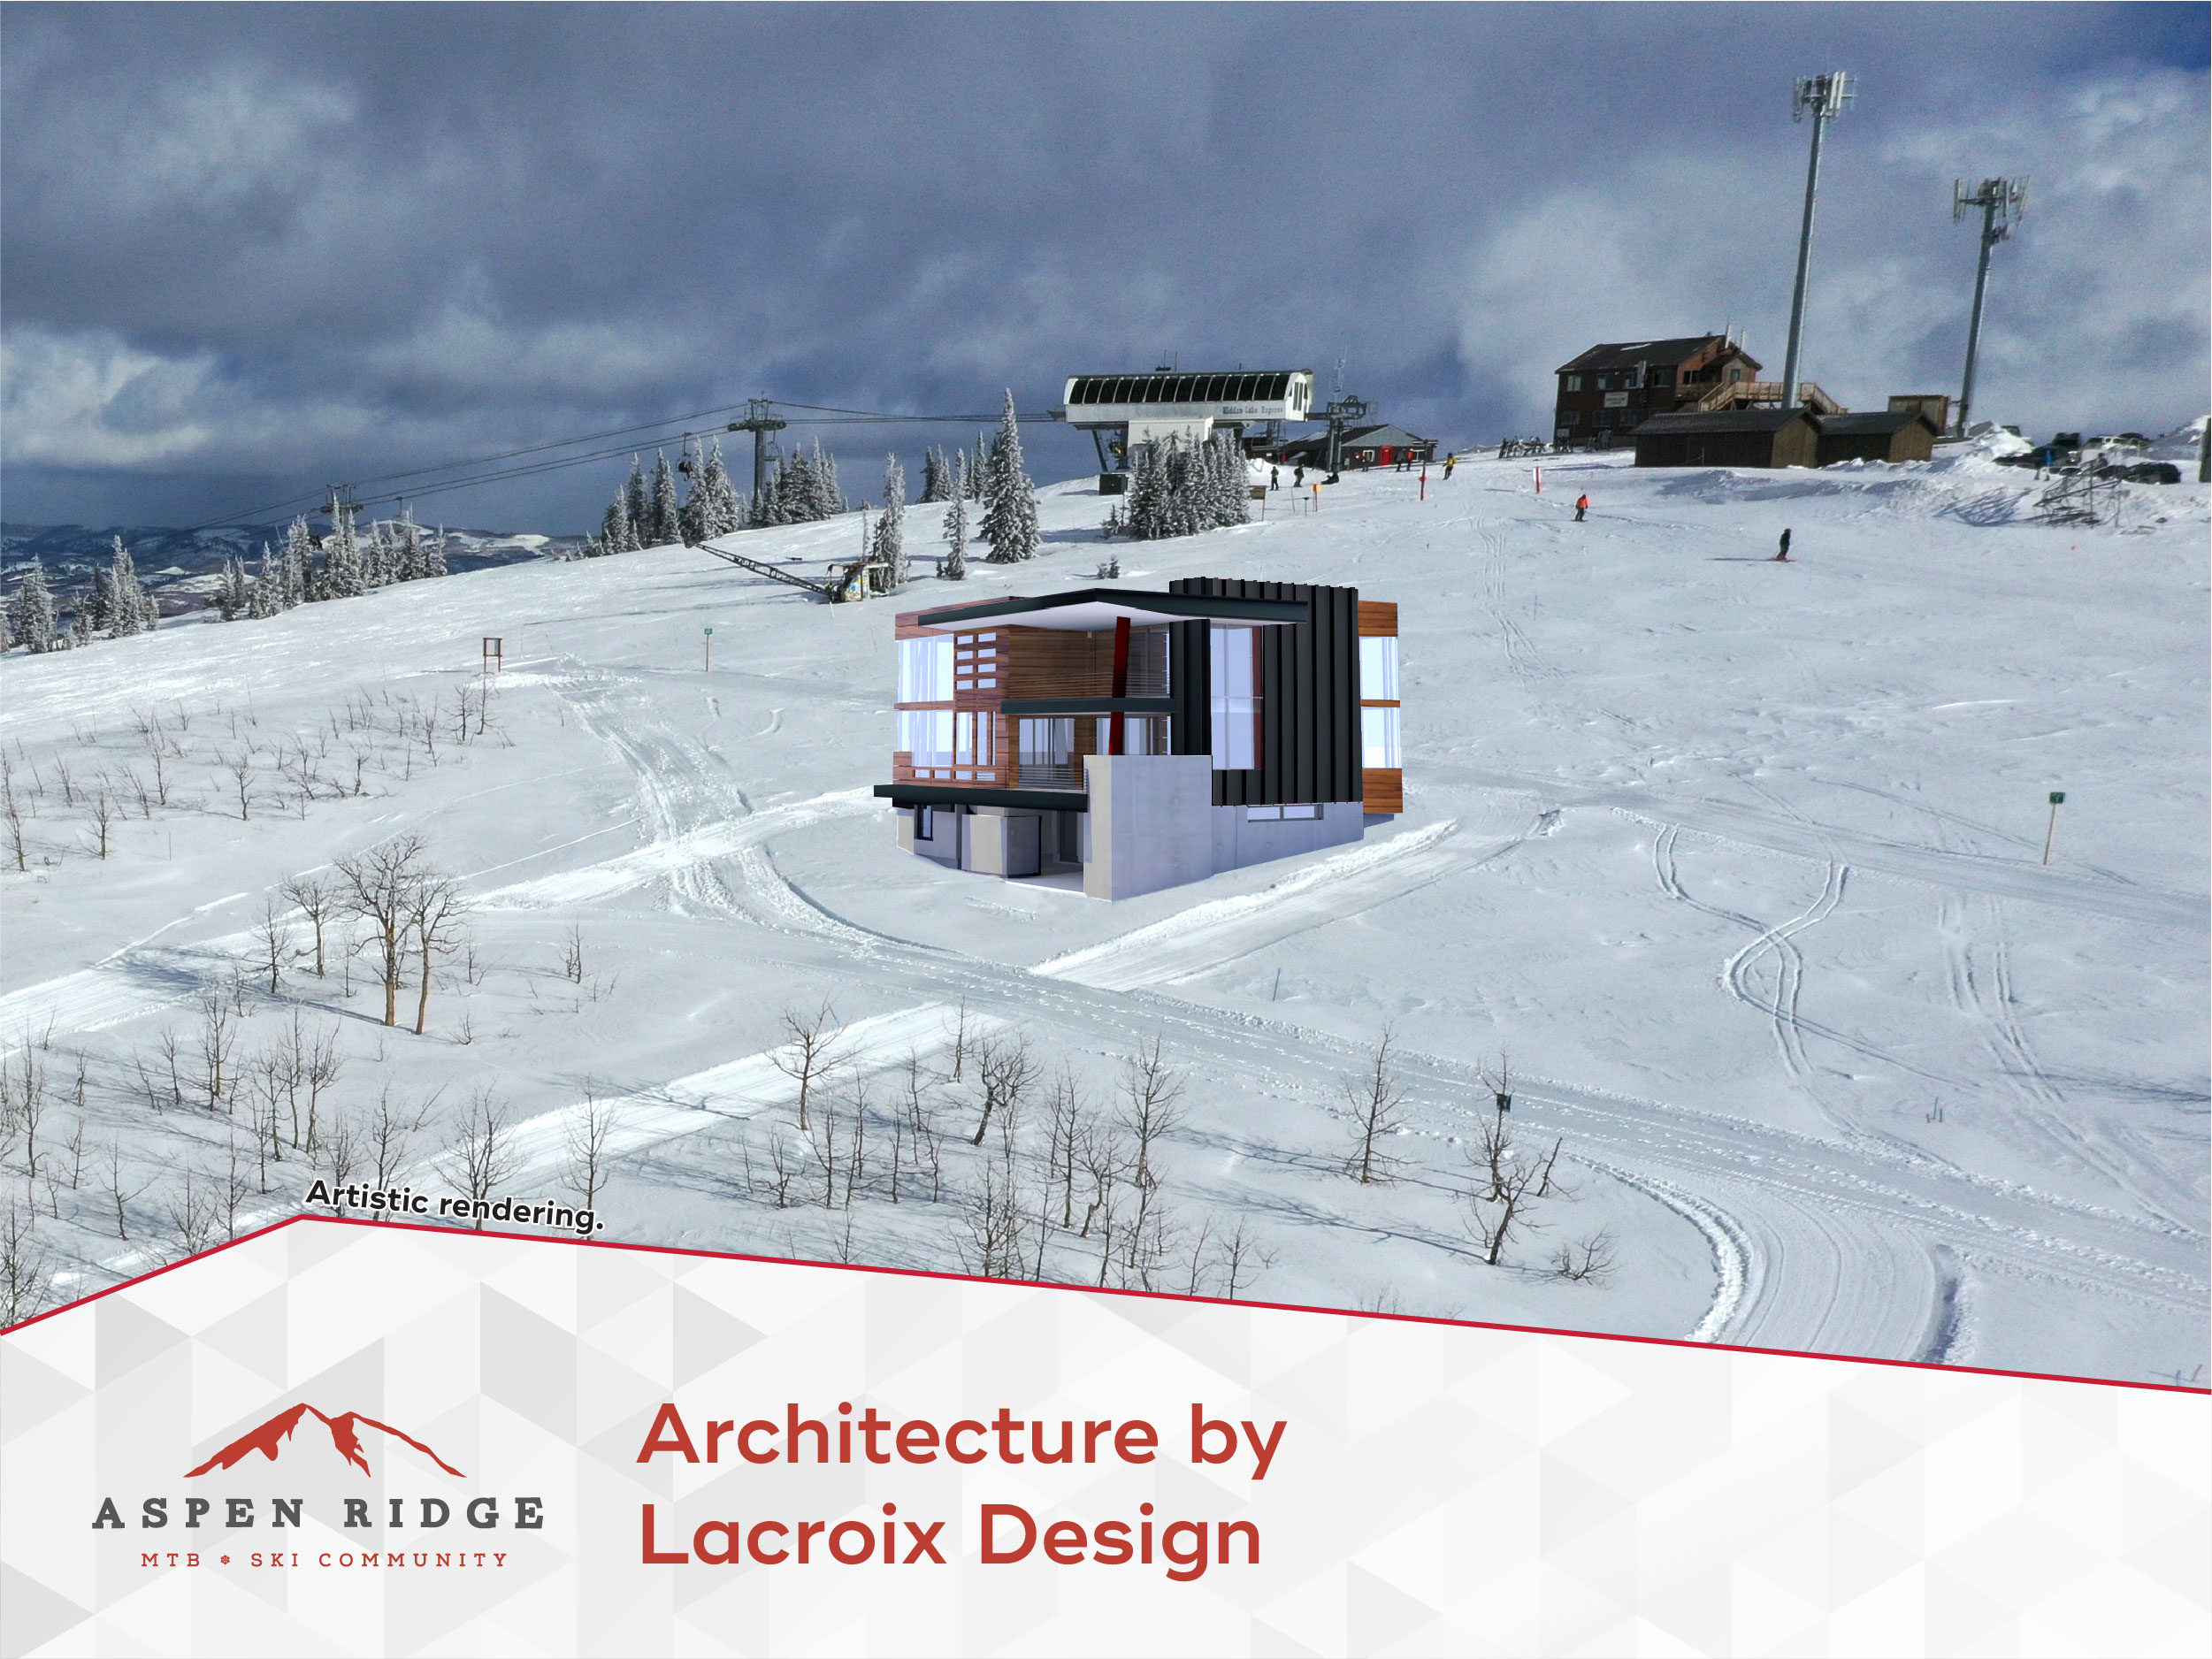 Home Rendering at Aspen Ridge. Architecture by Lacroix Design